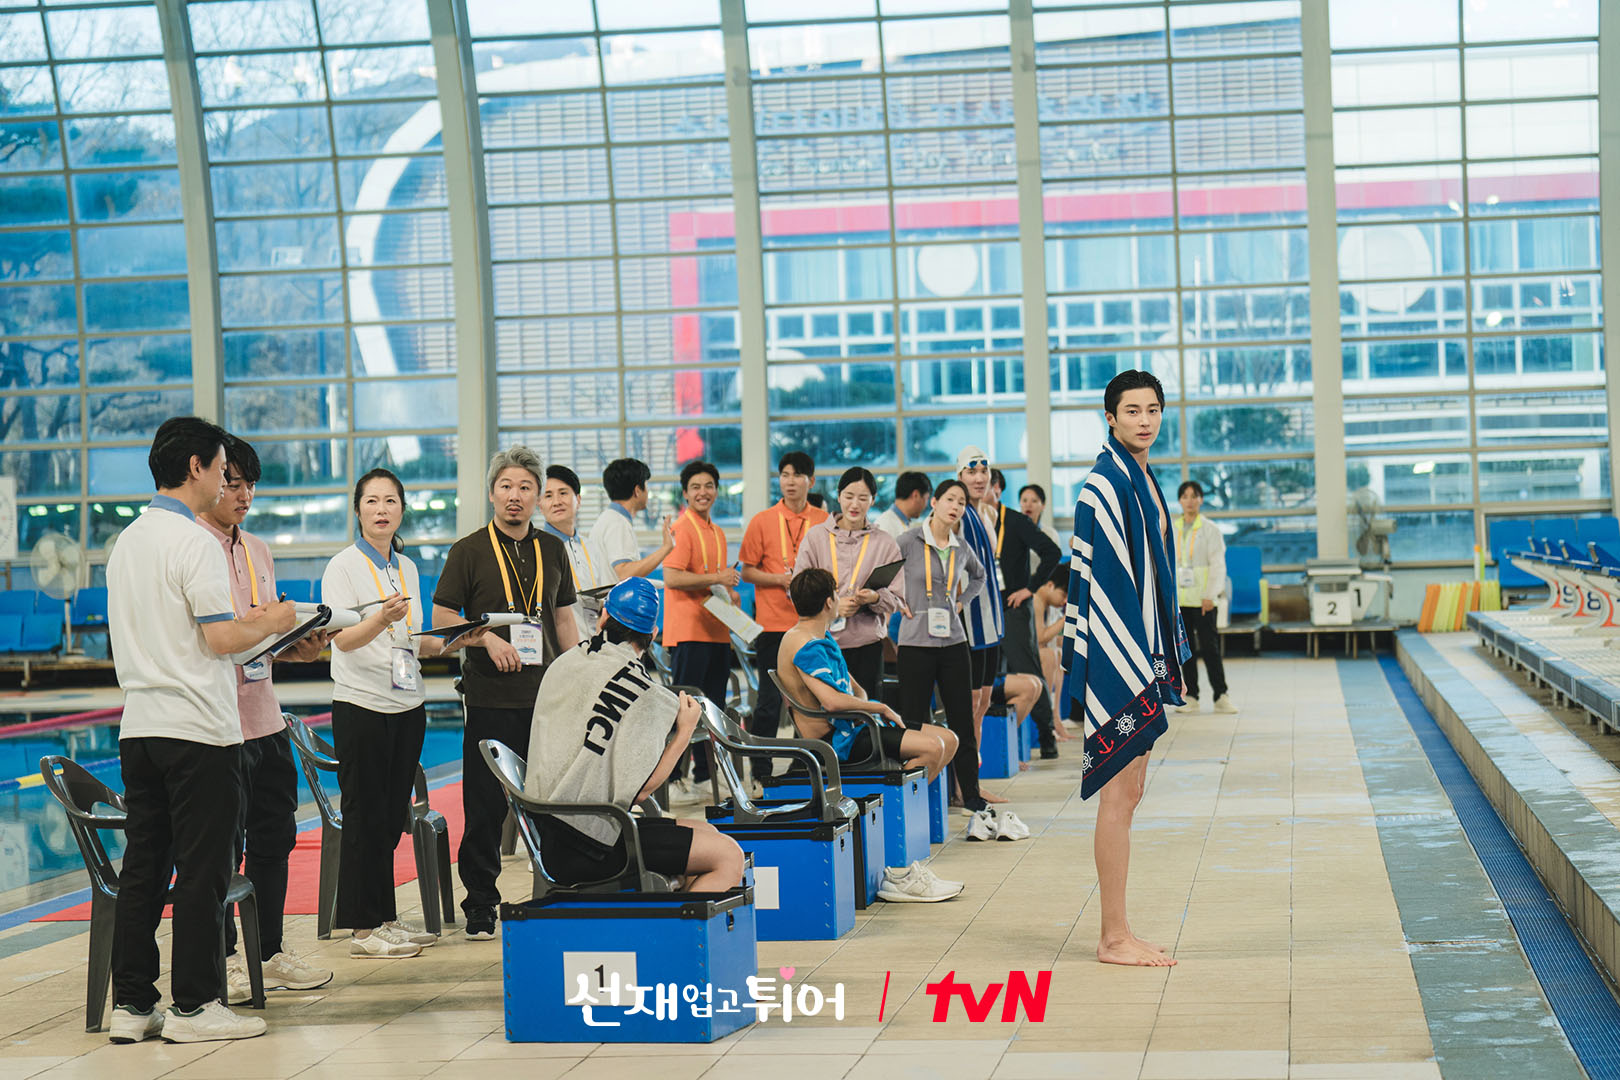 Byeon Woo Seok Showcases His Fantastic Swimming Skills In 